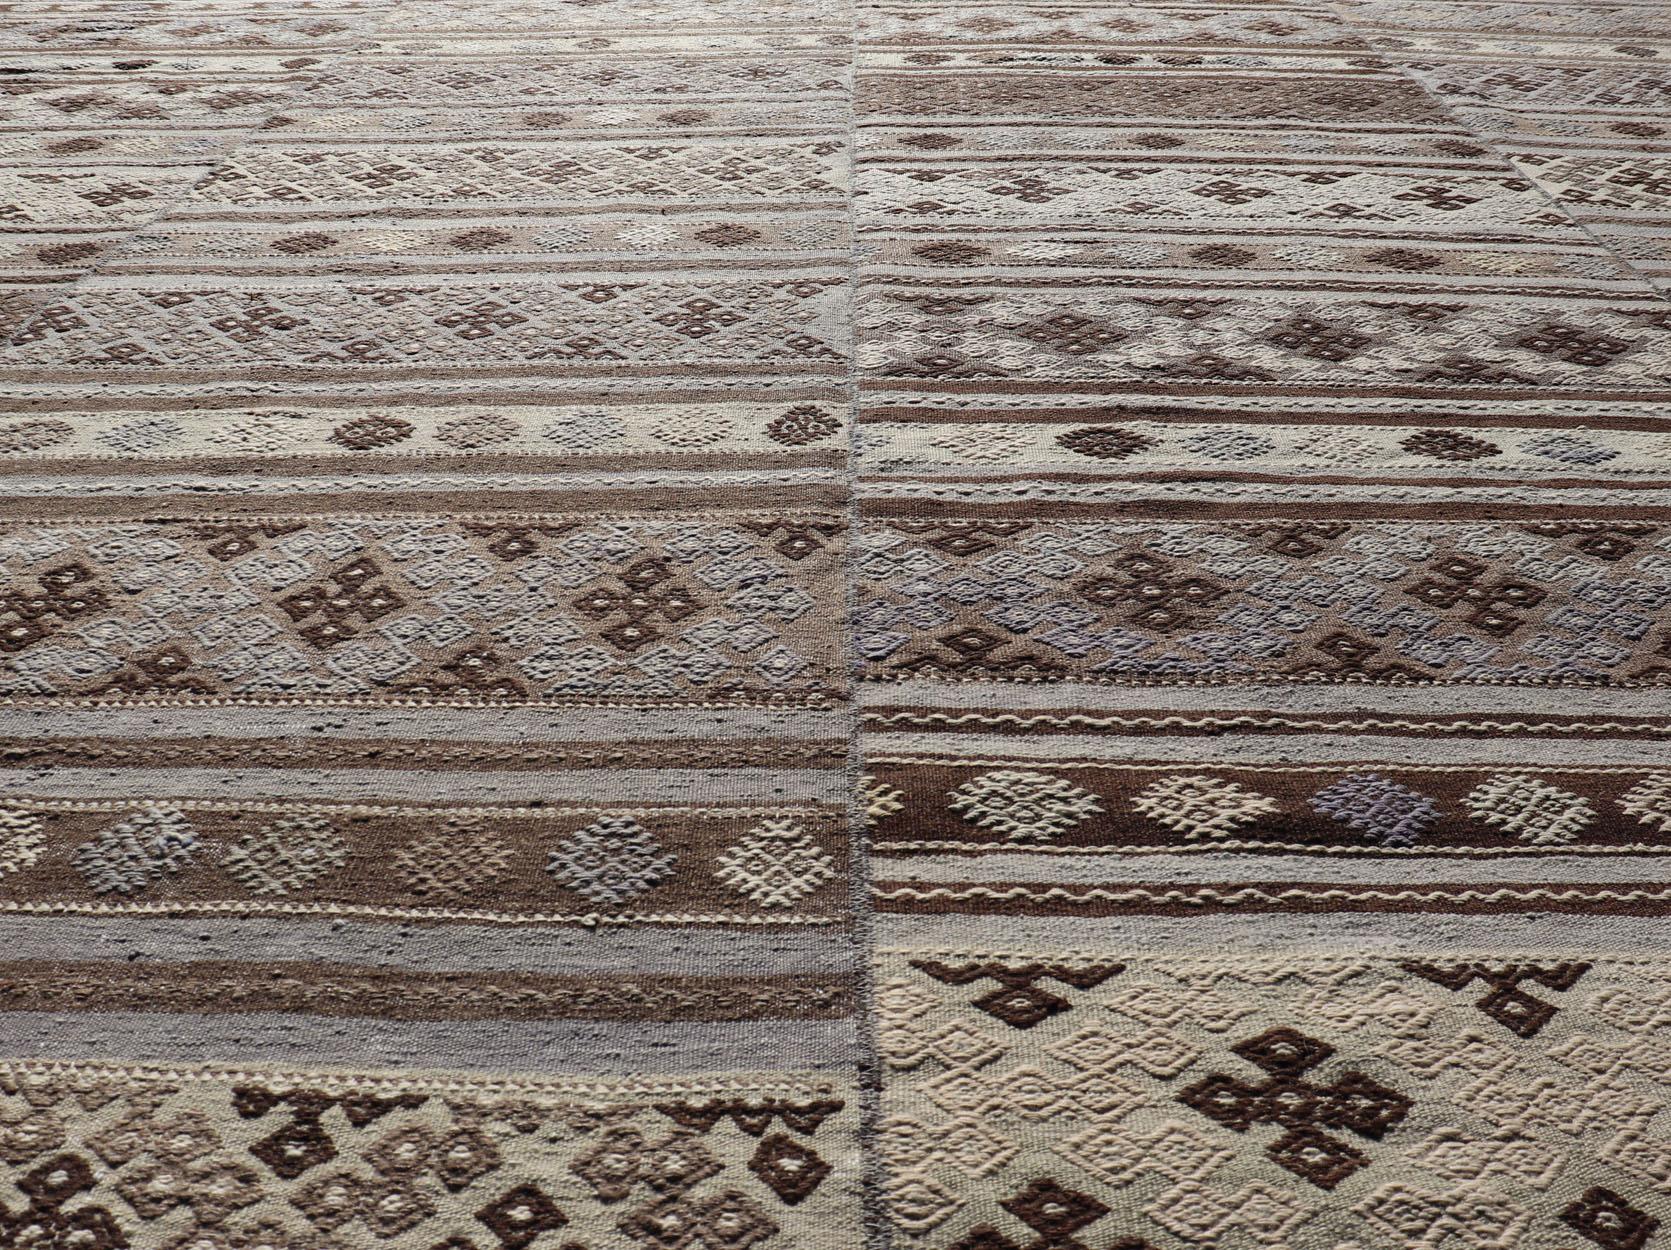 Measures: 10'10 x 11'6 
Large Vintage Flat-Woven Turkish Paneled Kilim Rug in Wool with Stripe Design. Keivan Woven Arts; rug EN-14041, country of origin / type: Turkey / Kilim, circa 1950.

This flat-weave tribal Turkish kilim has been hand-woven